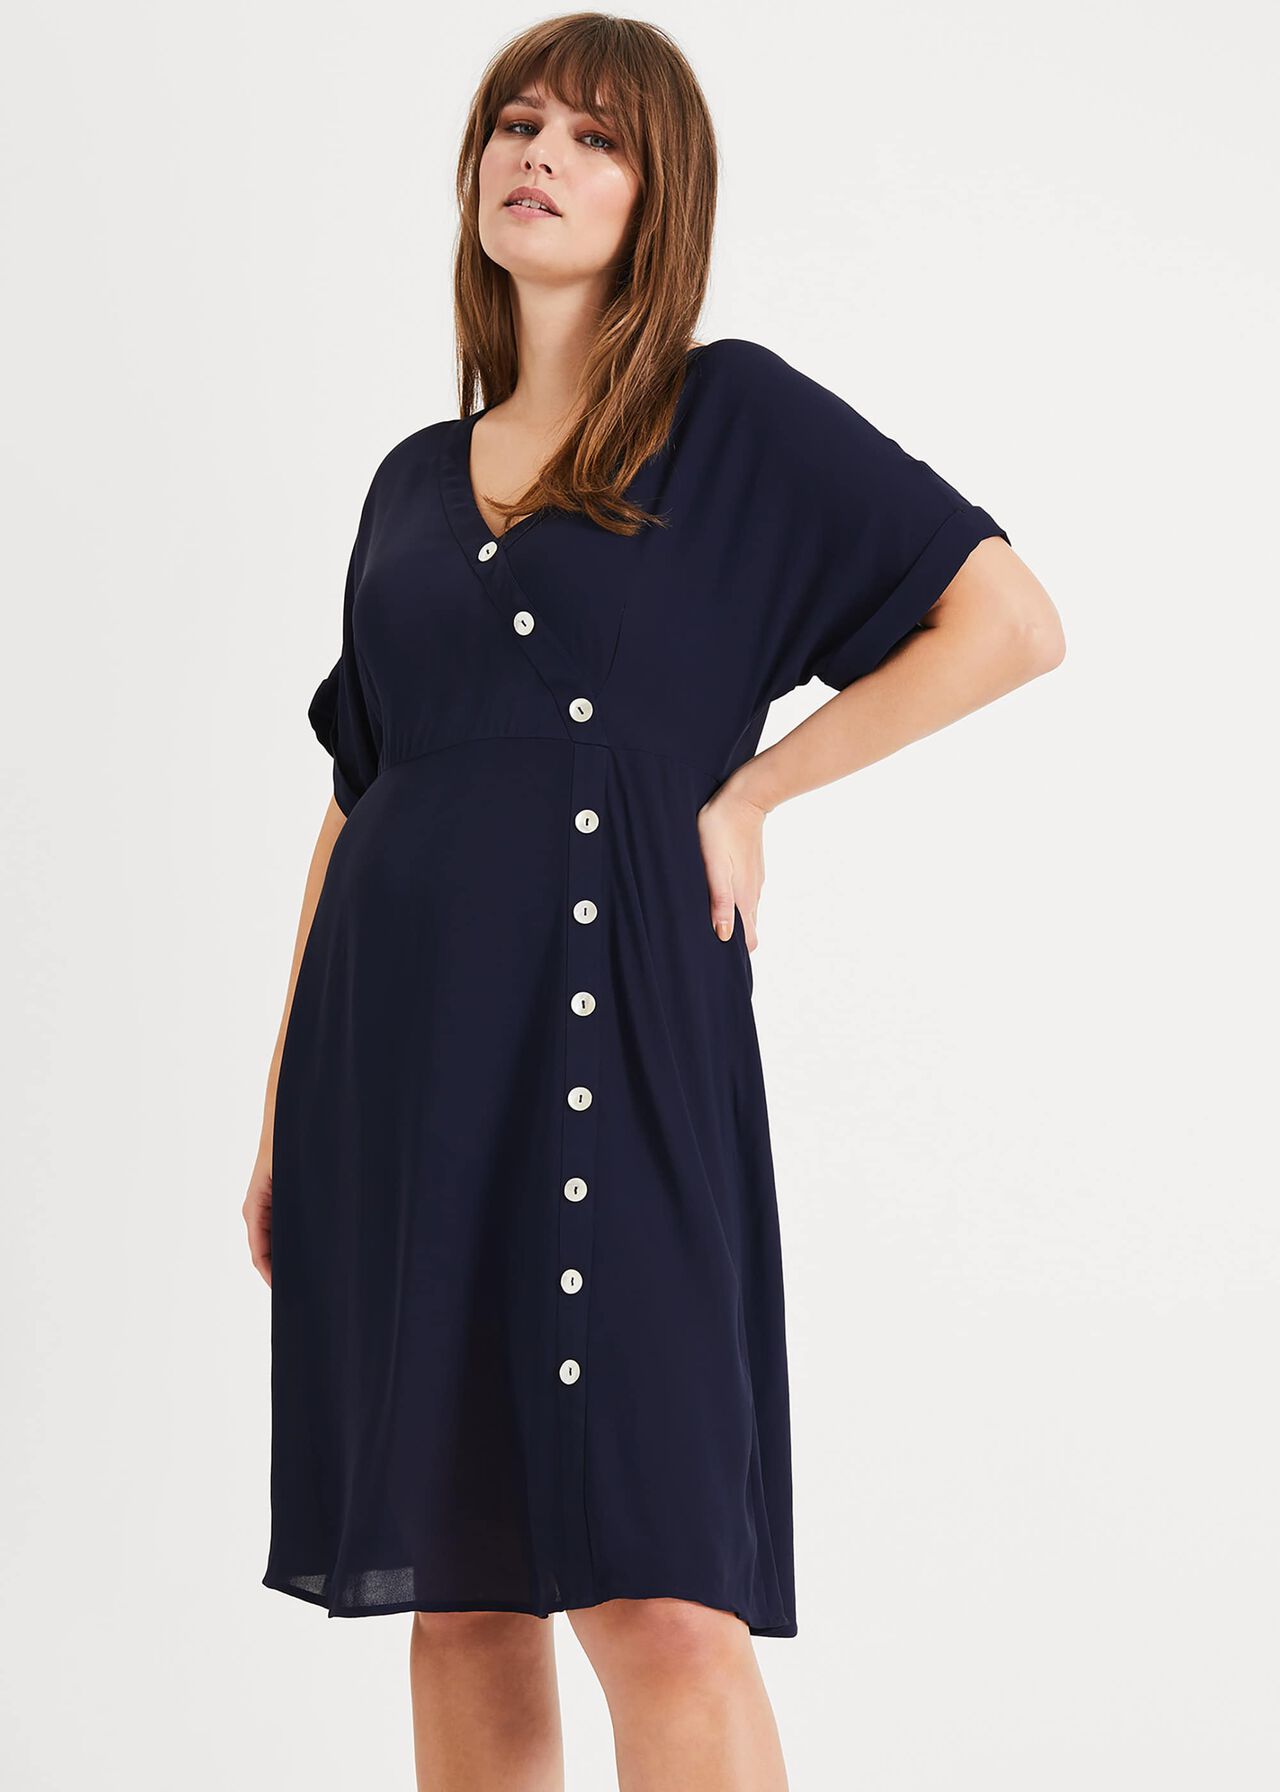 Annalise Button Dress